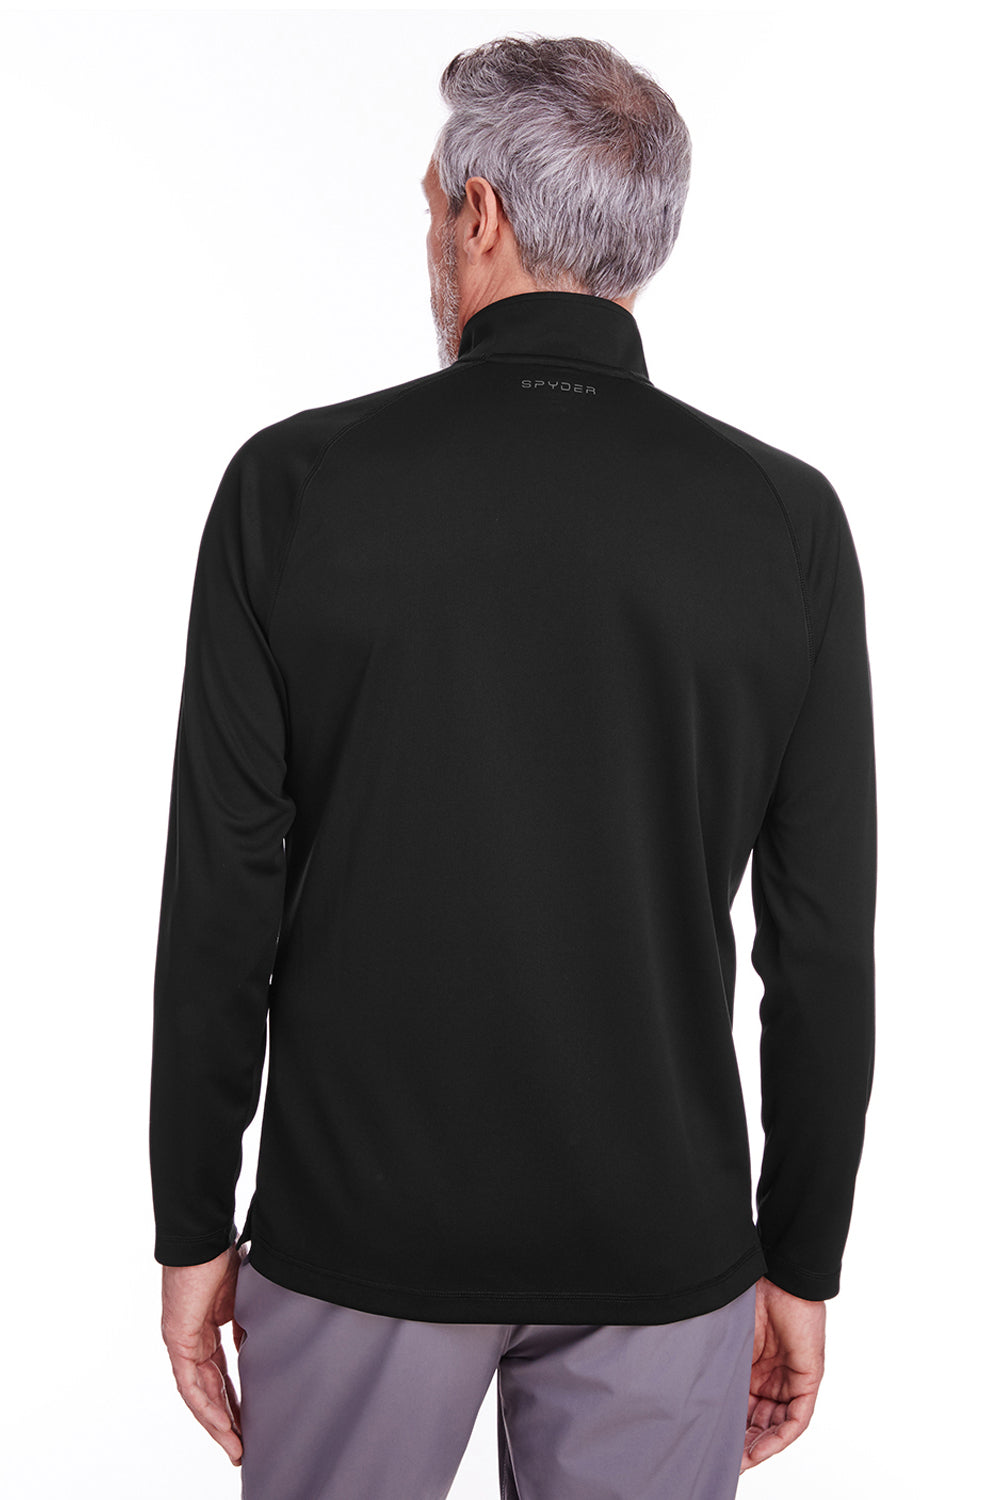 Spyder S16797 Mens Freestyle 1/4 Zip Sweatshirt Black Back